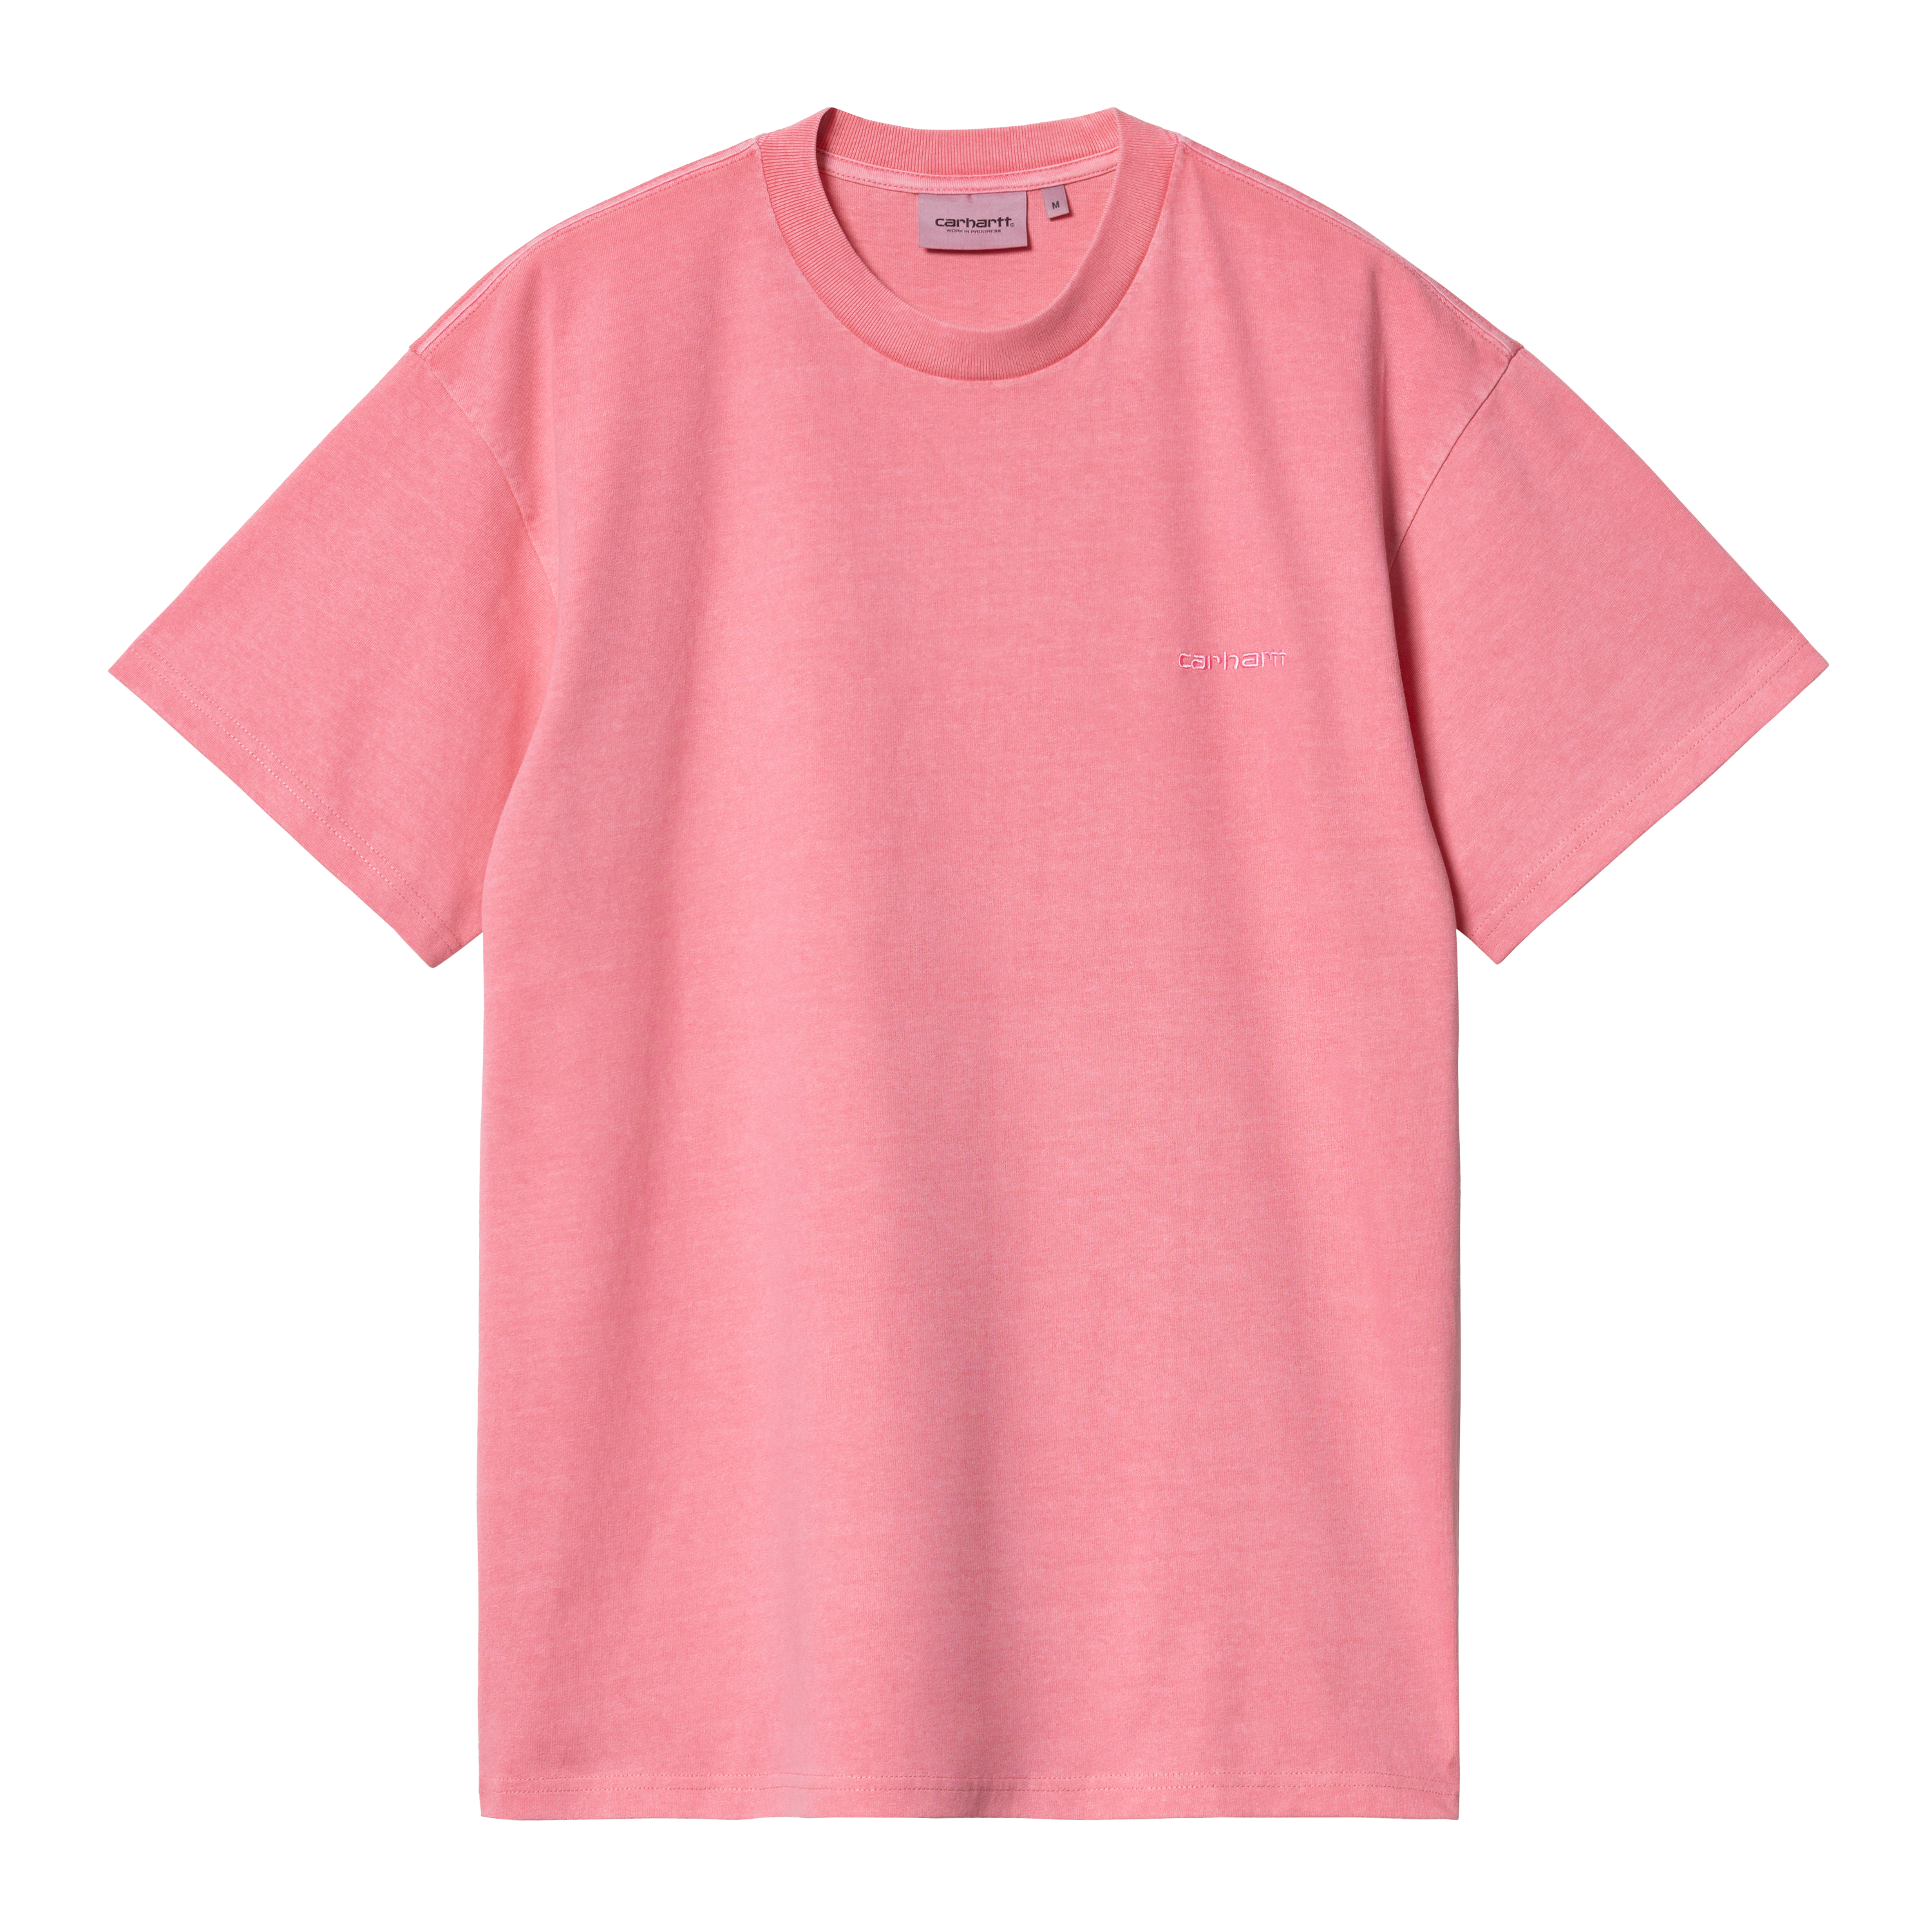 Carhartt WIP Short Sleeve Duster Script T-Shirt in Rosa